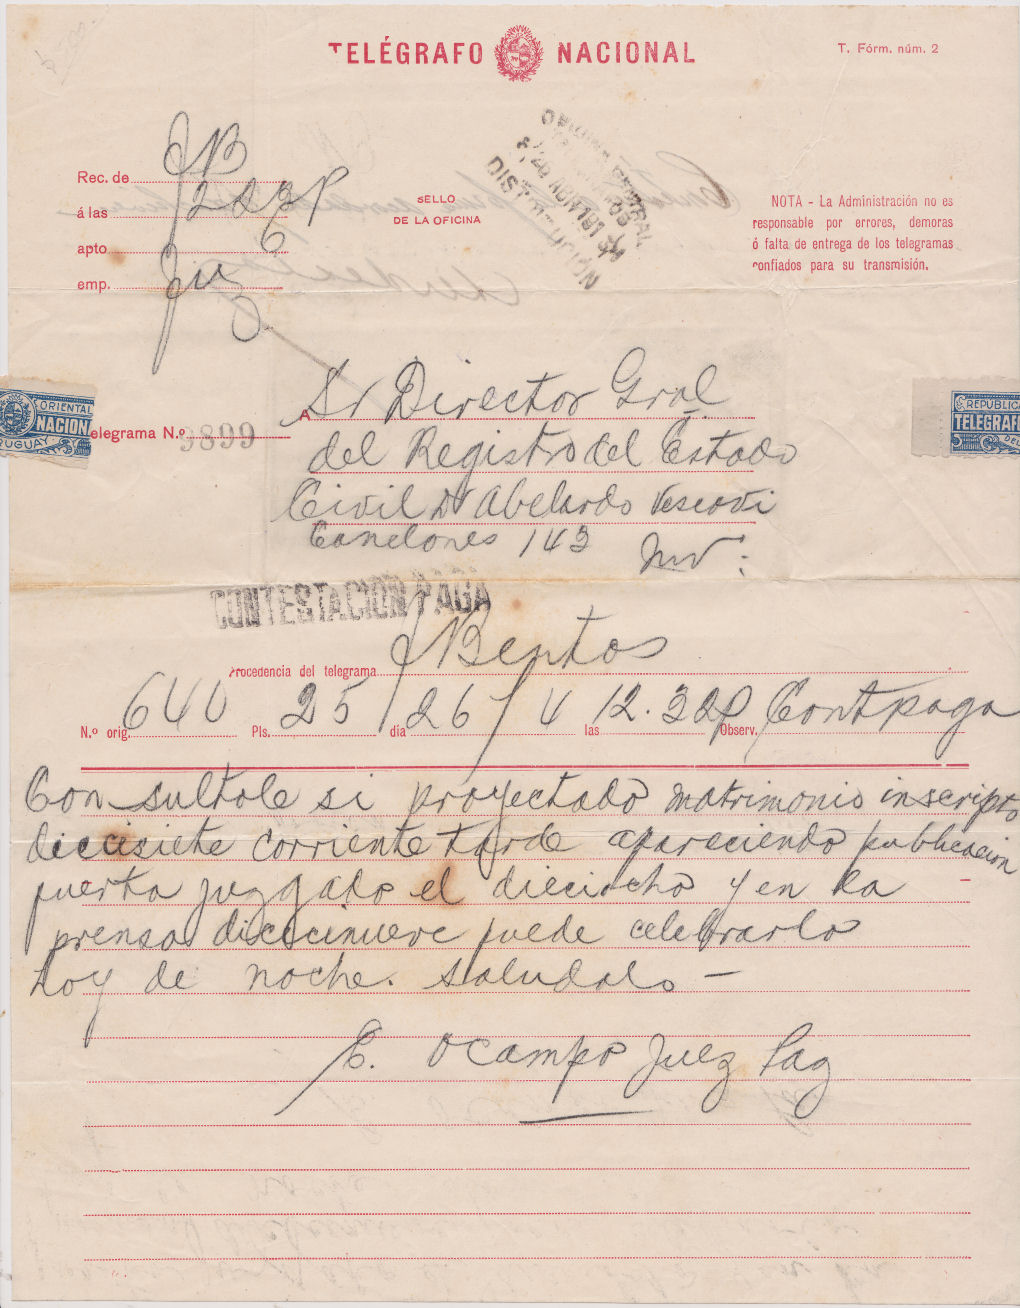 Telegram of 26-4-1913